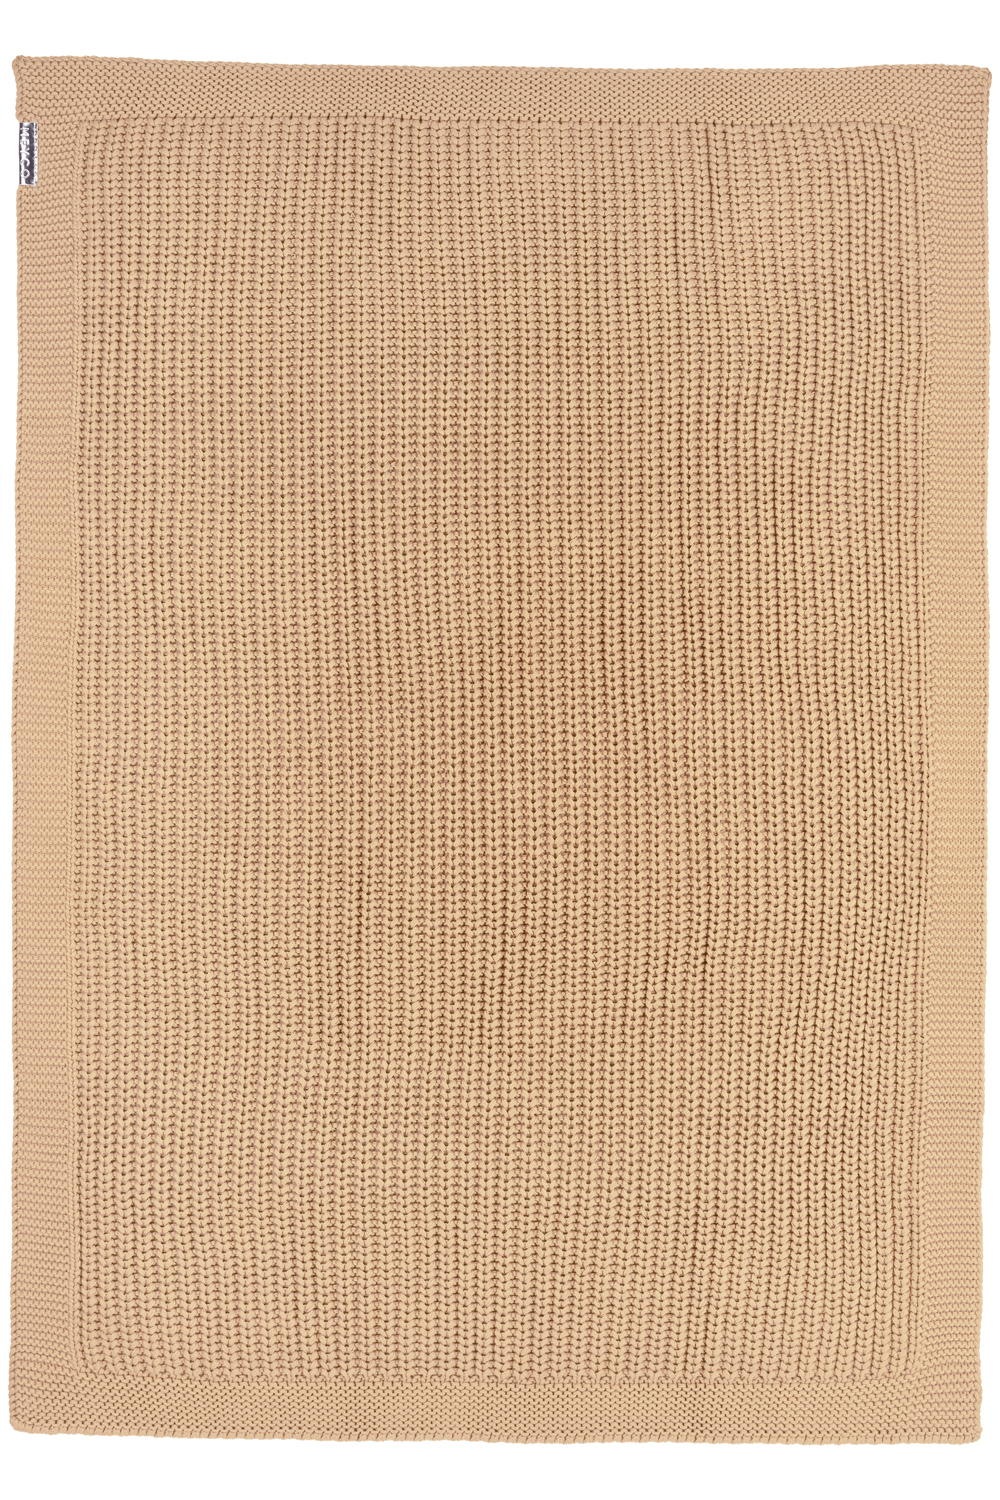 Ledikant deken Herringbone - warm sand - 100x150cm